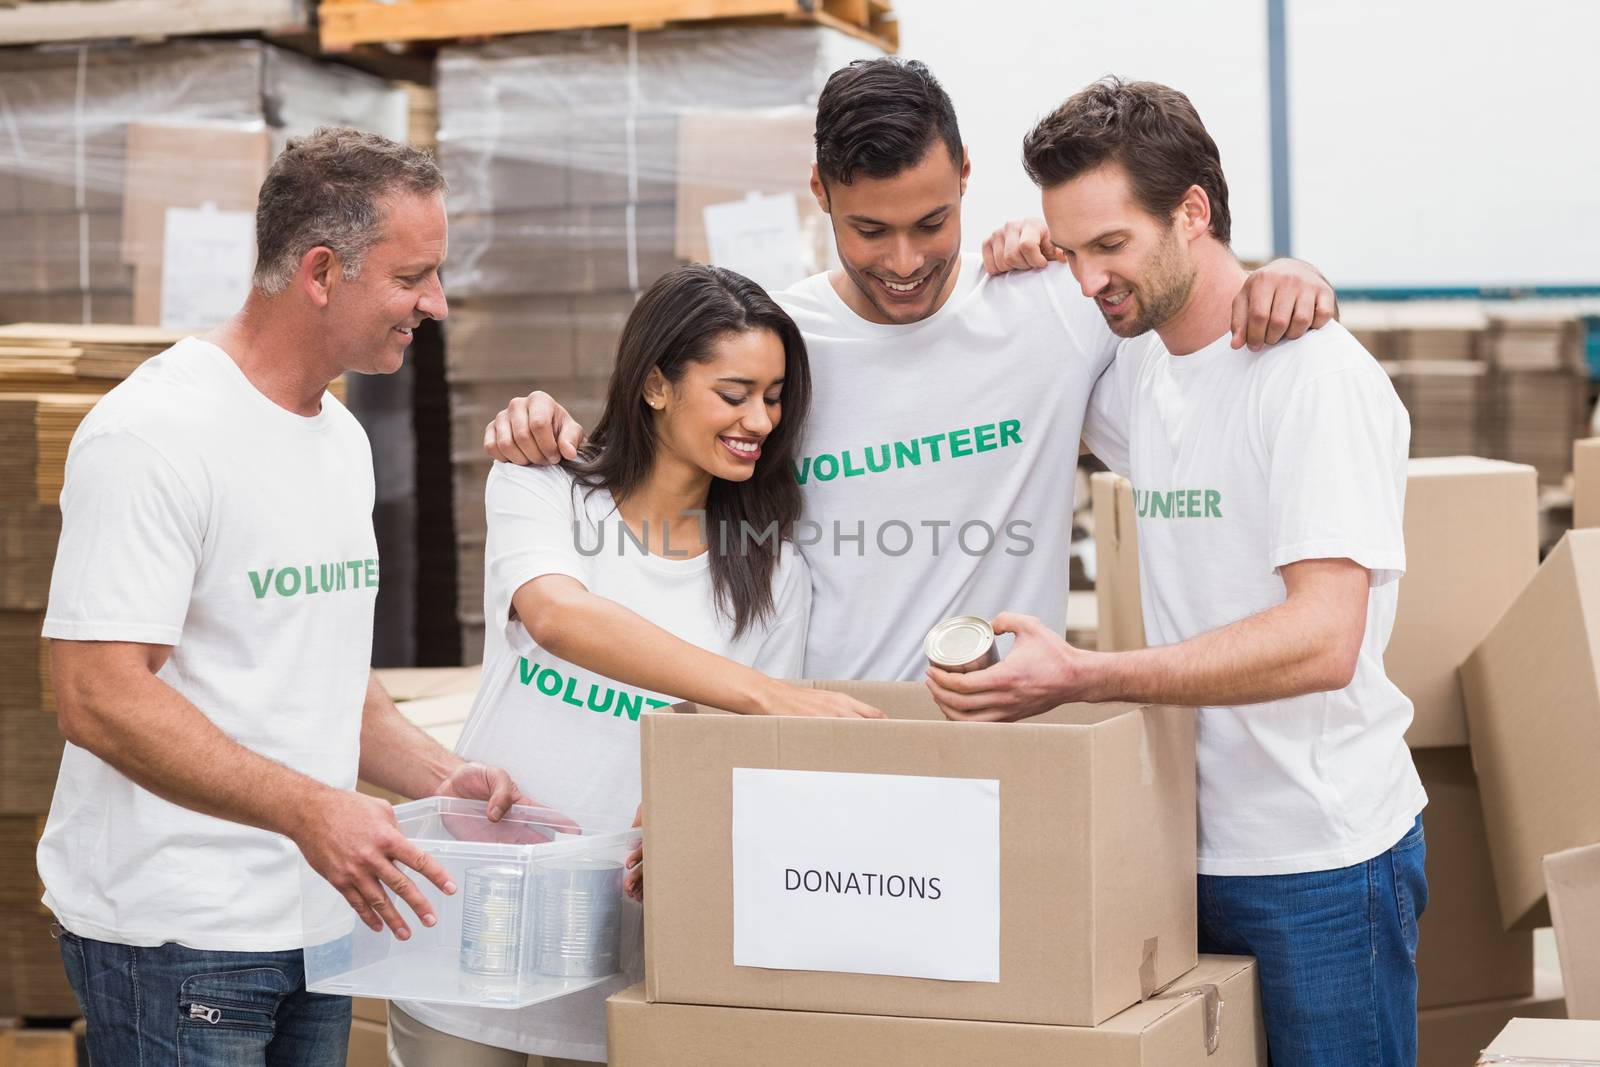 Volunteer team packing a food donation box by Wavebreakmedia